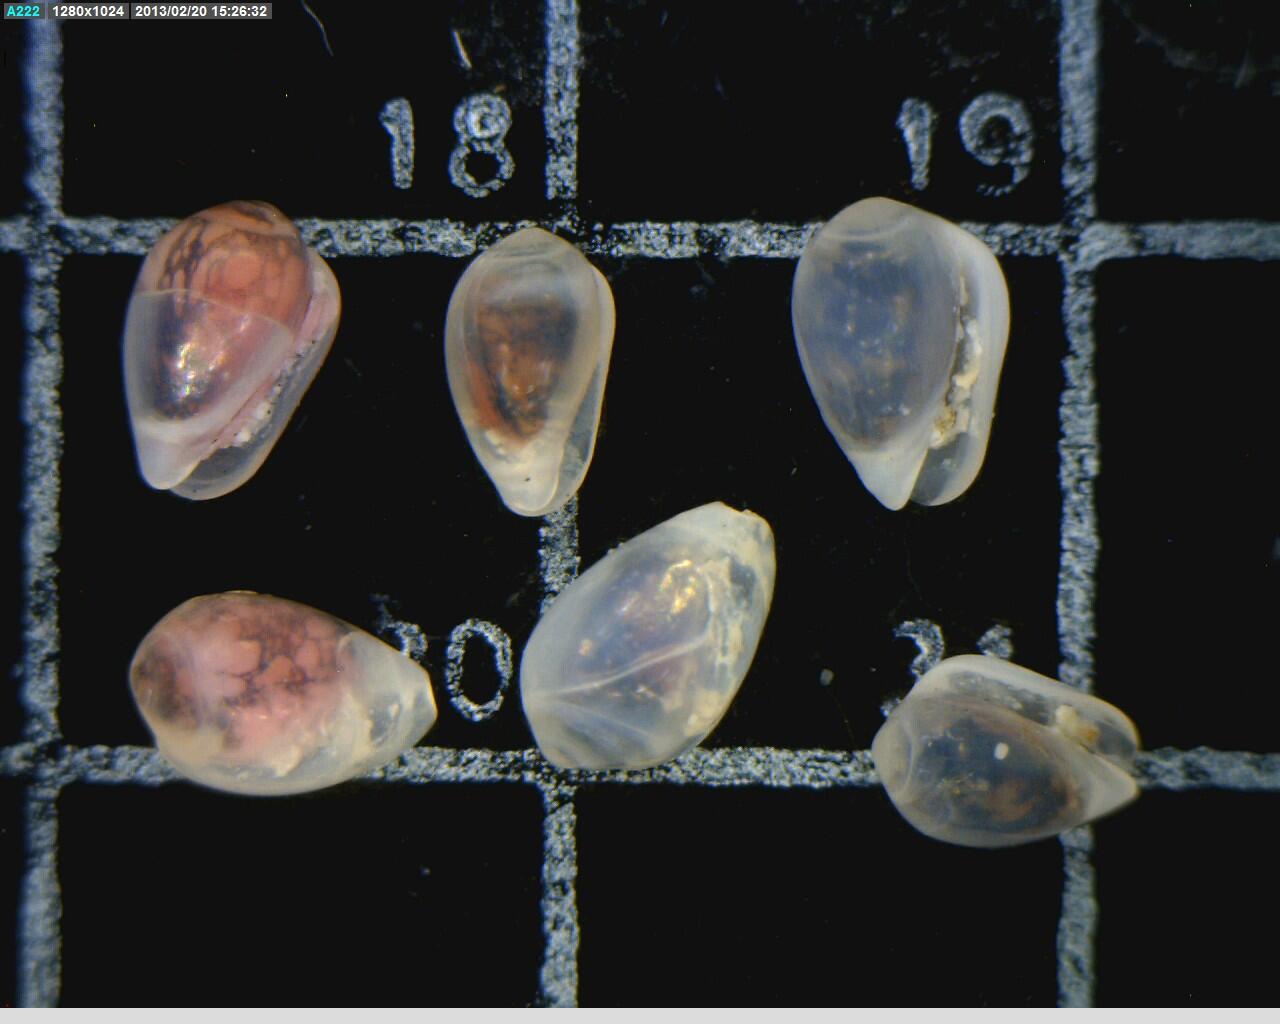 Digital microscope picture of gastropods (Gibberula lavalleeana) on a slide.